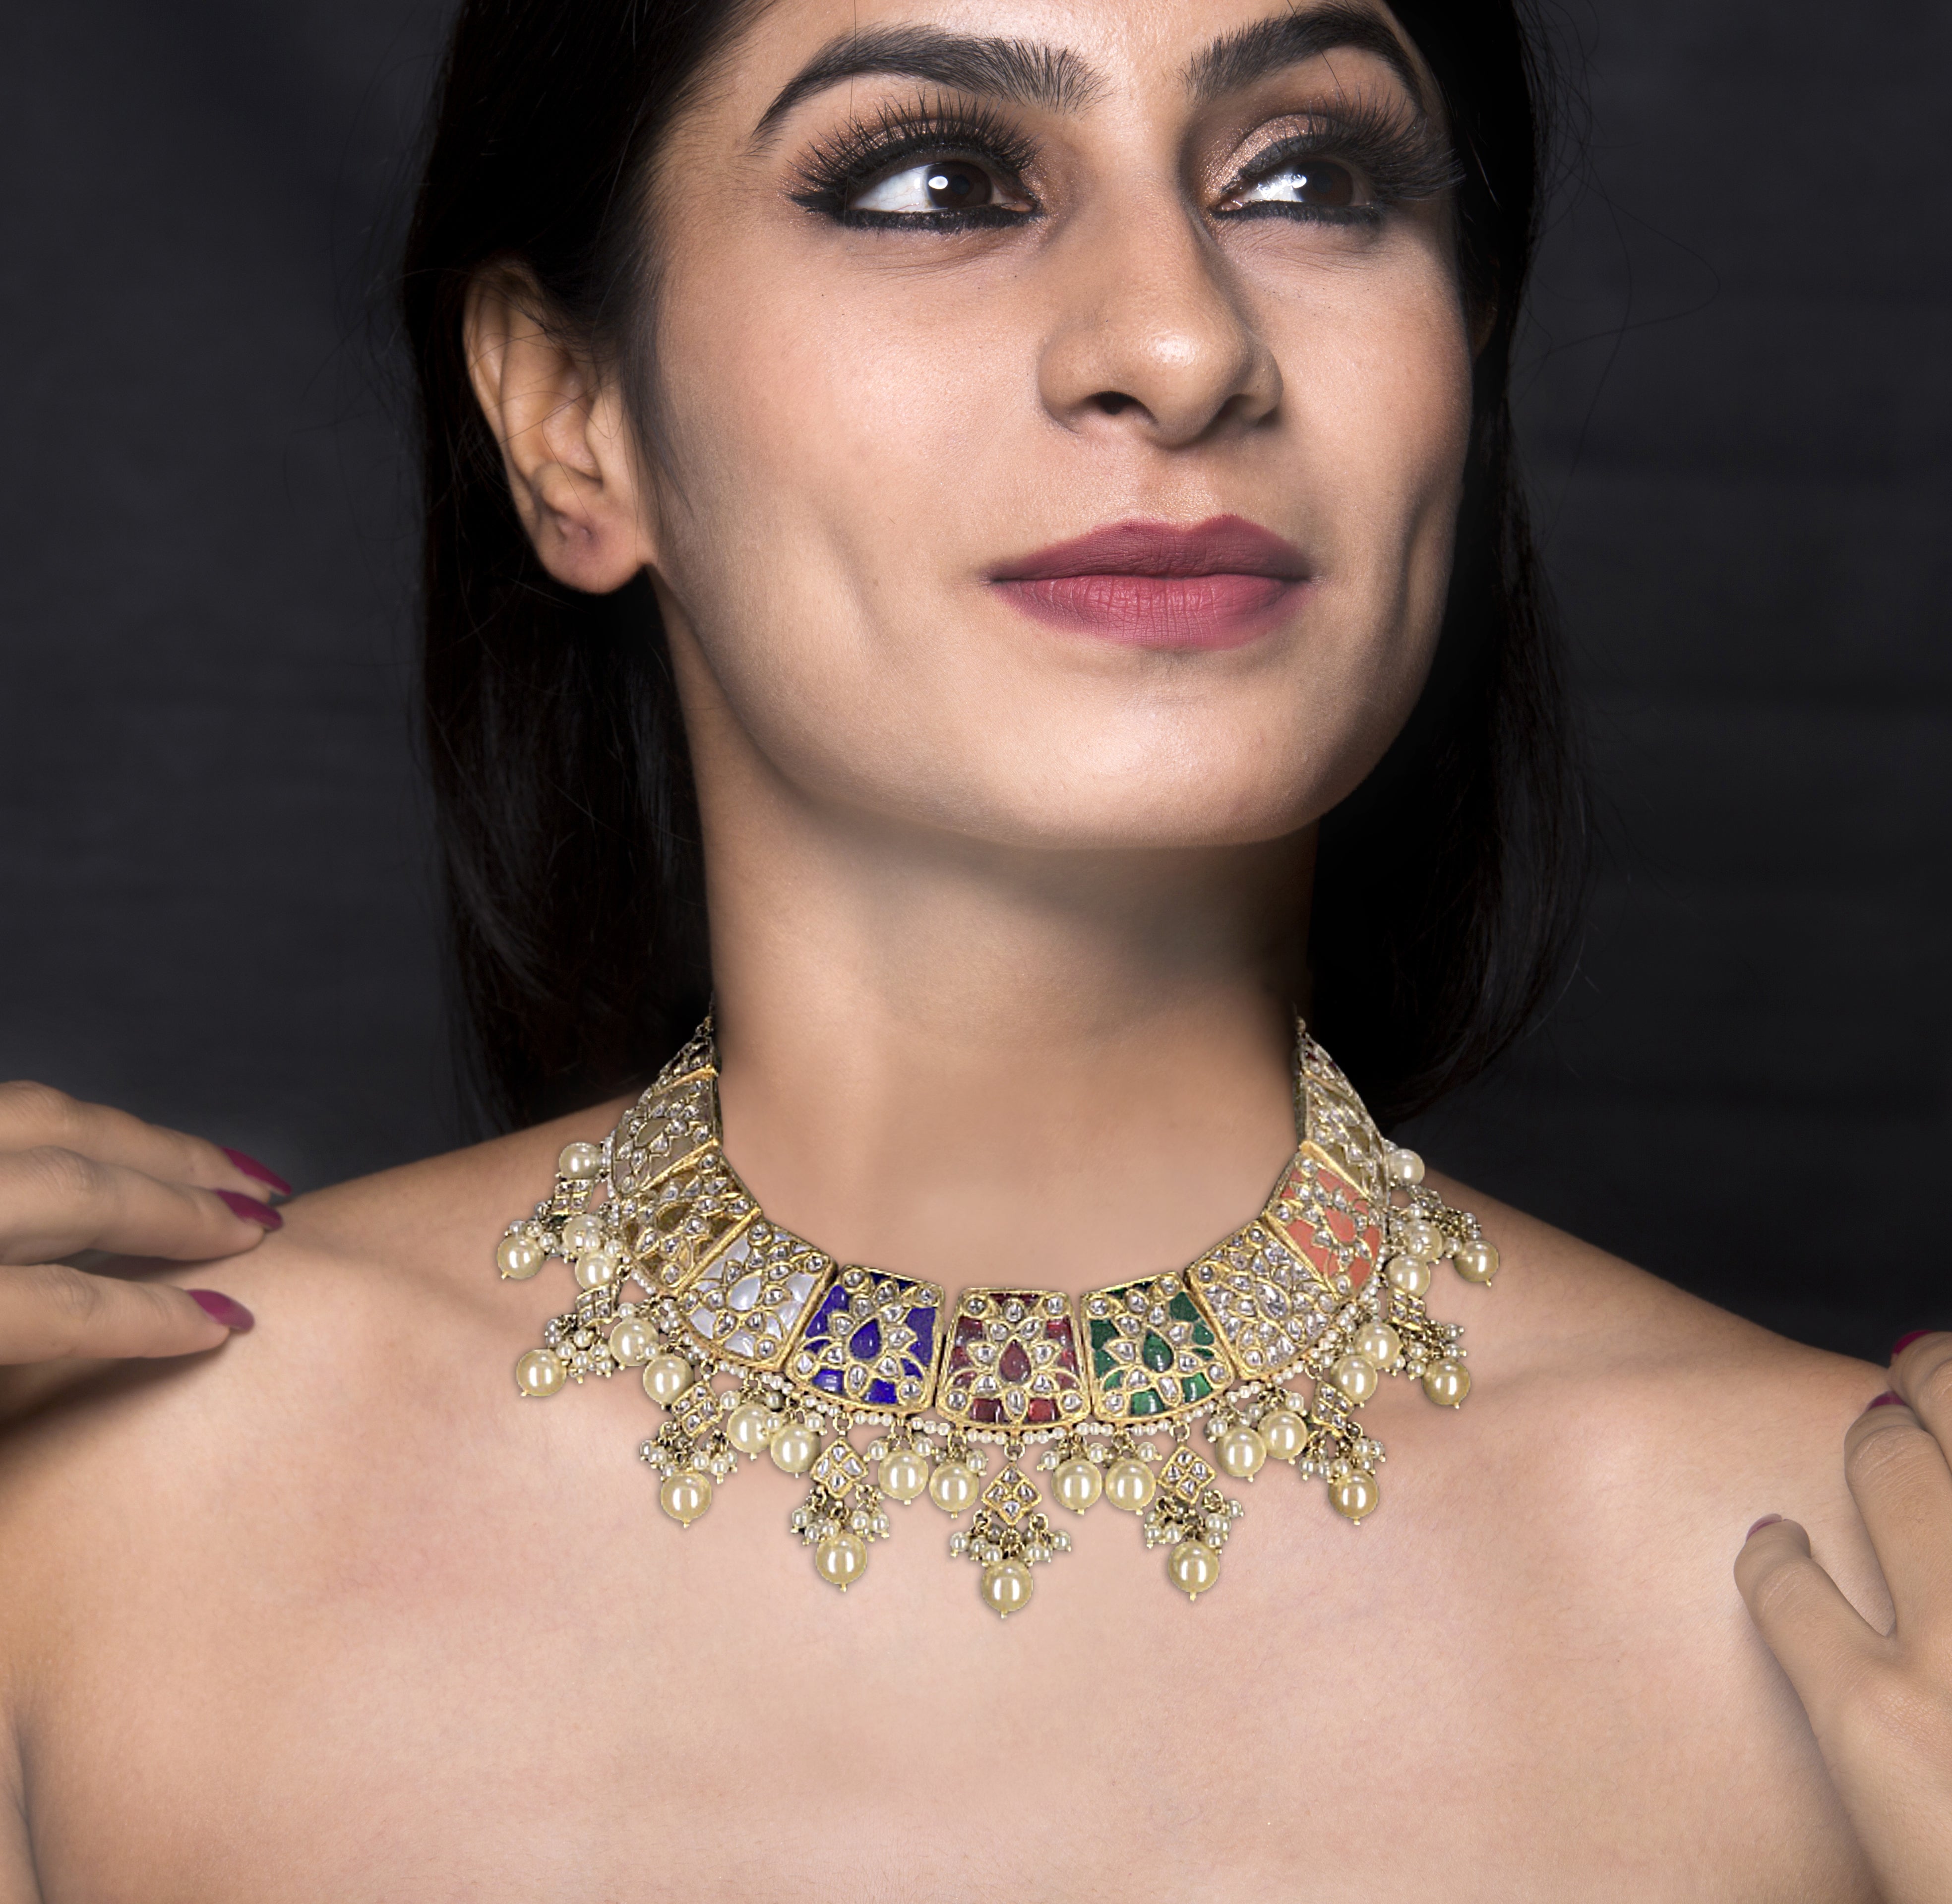 23k Gold and Diamond Polki Navratna Necklace Set enhanced with Lustrous Pearls